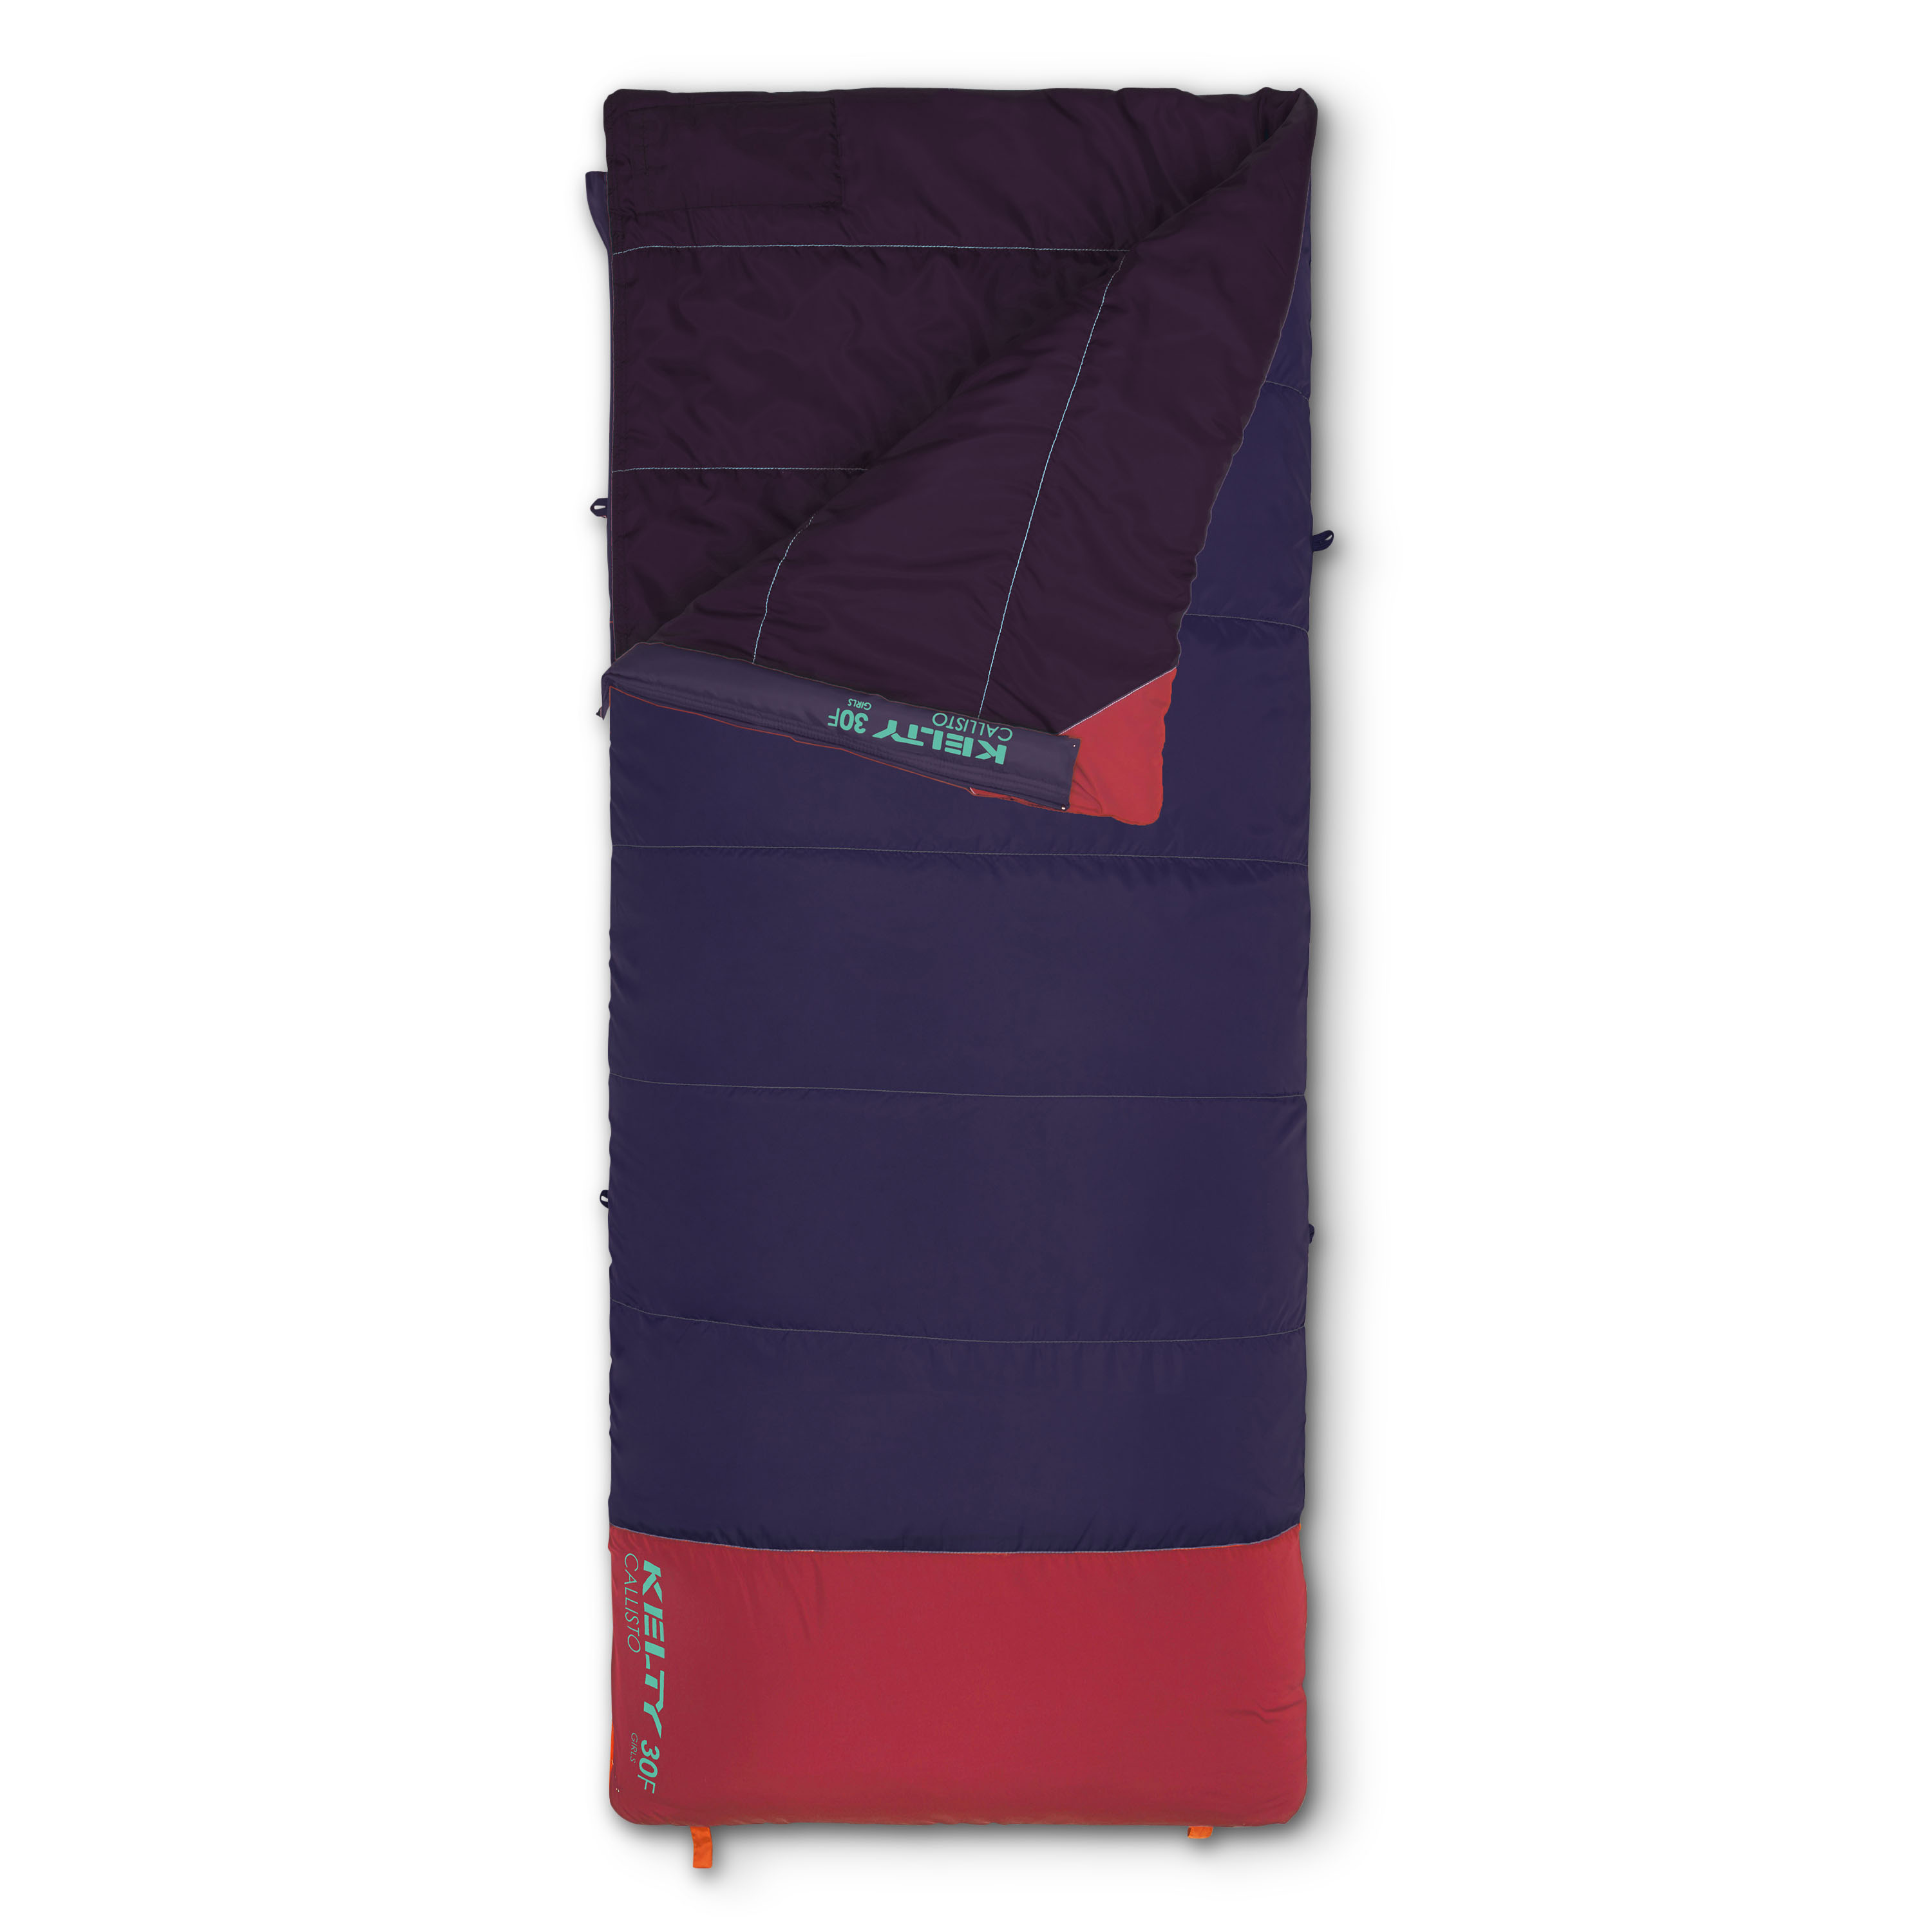 Italian Plum - Kelty Kids Callisto 30 sleeping bag, shown unzipped quarter length